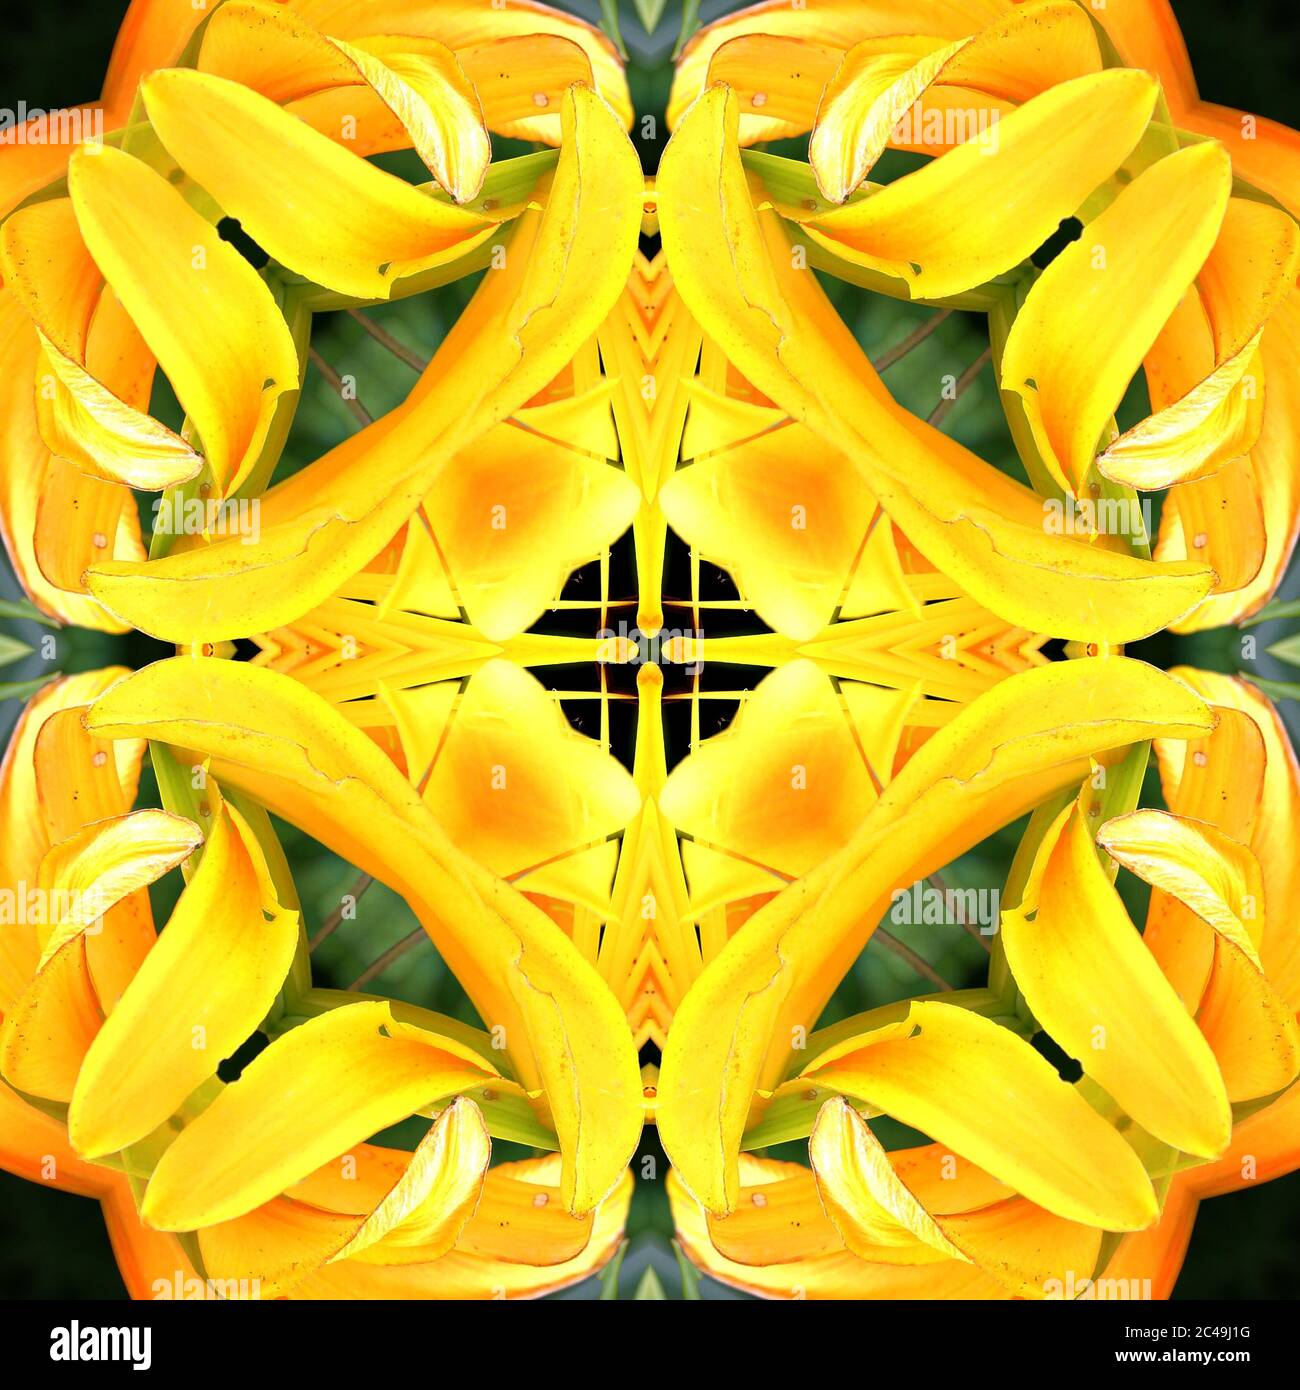 Seamless symmetrical pattern abstract banana skin texture Stock Photo